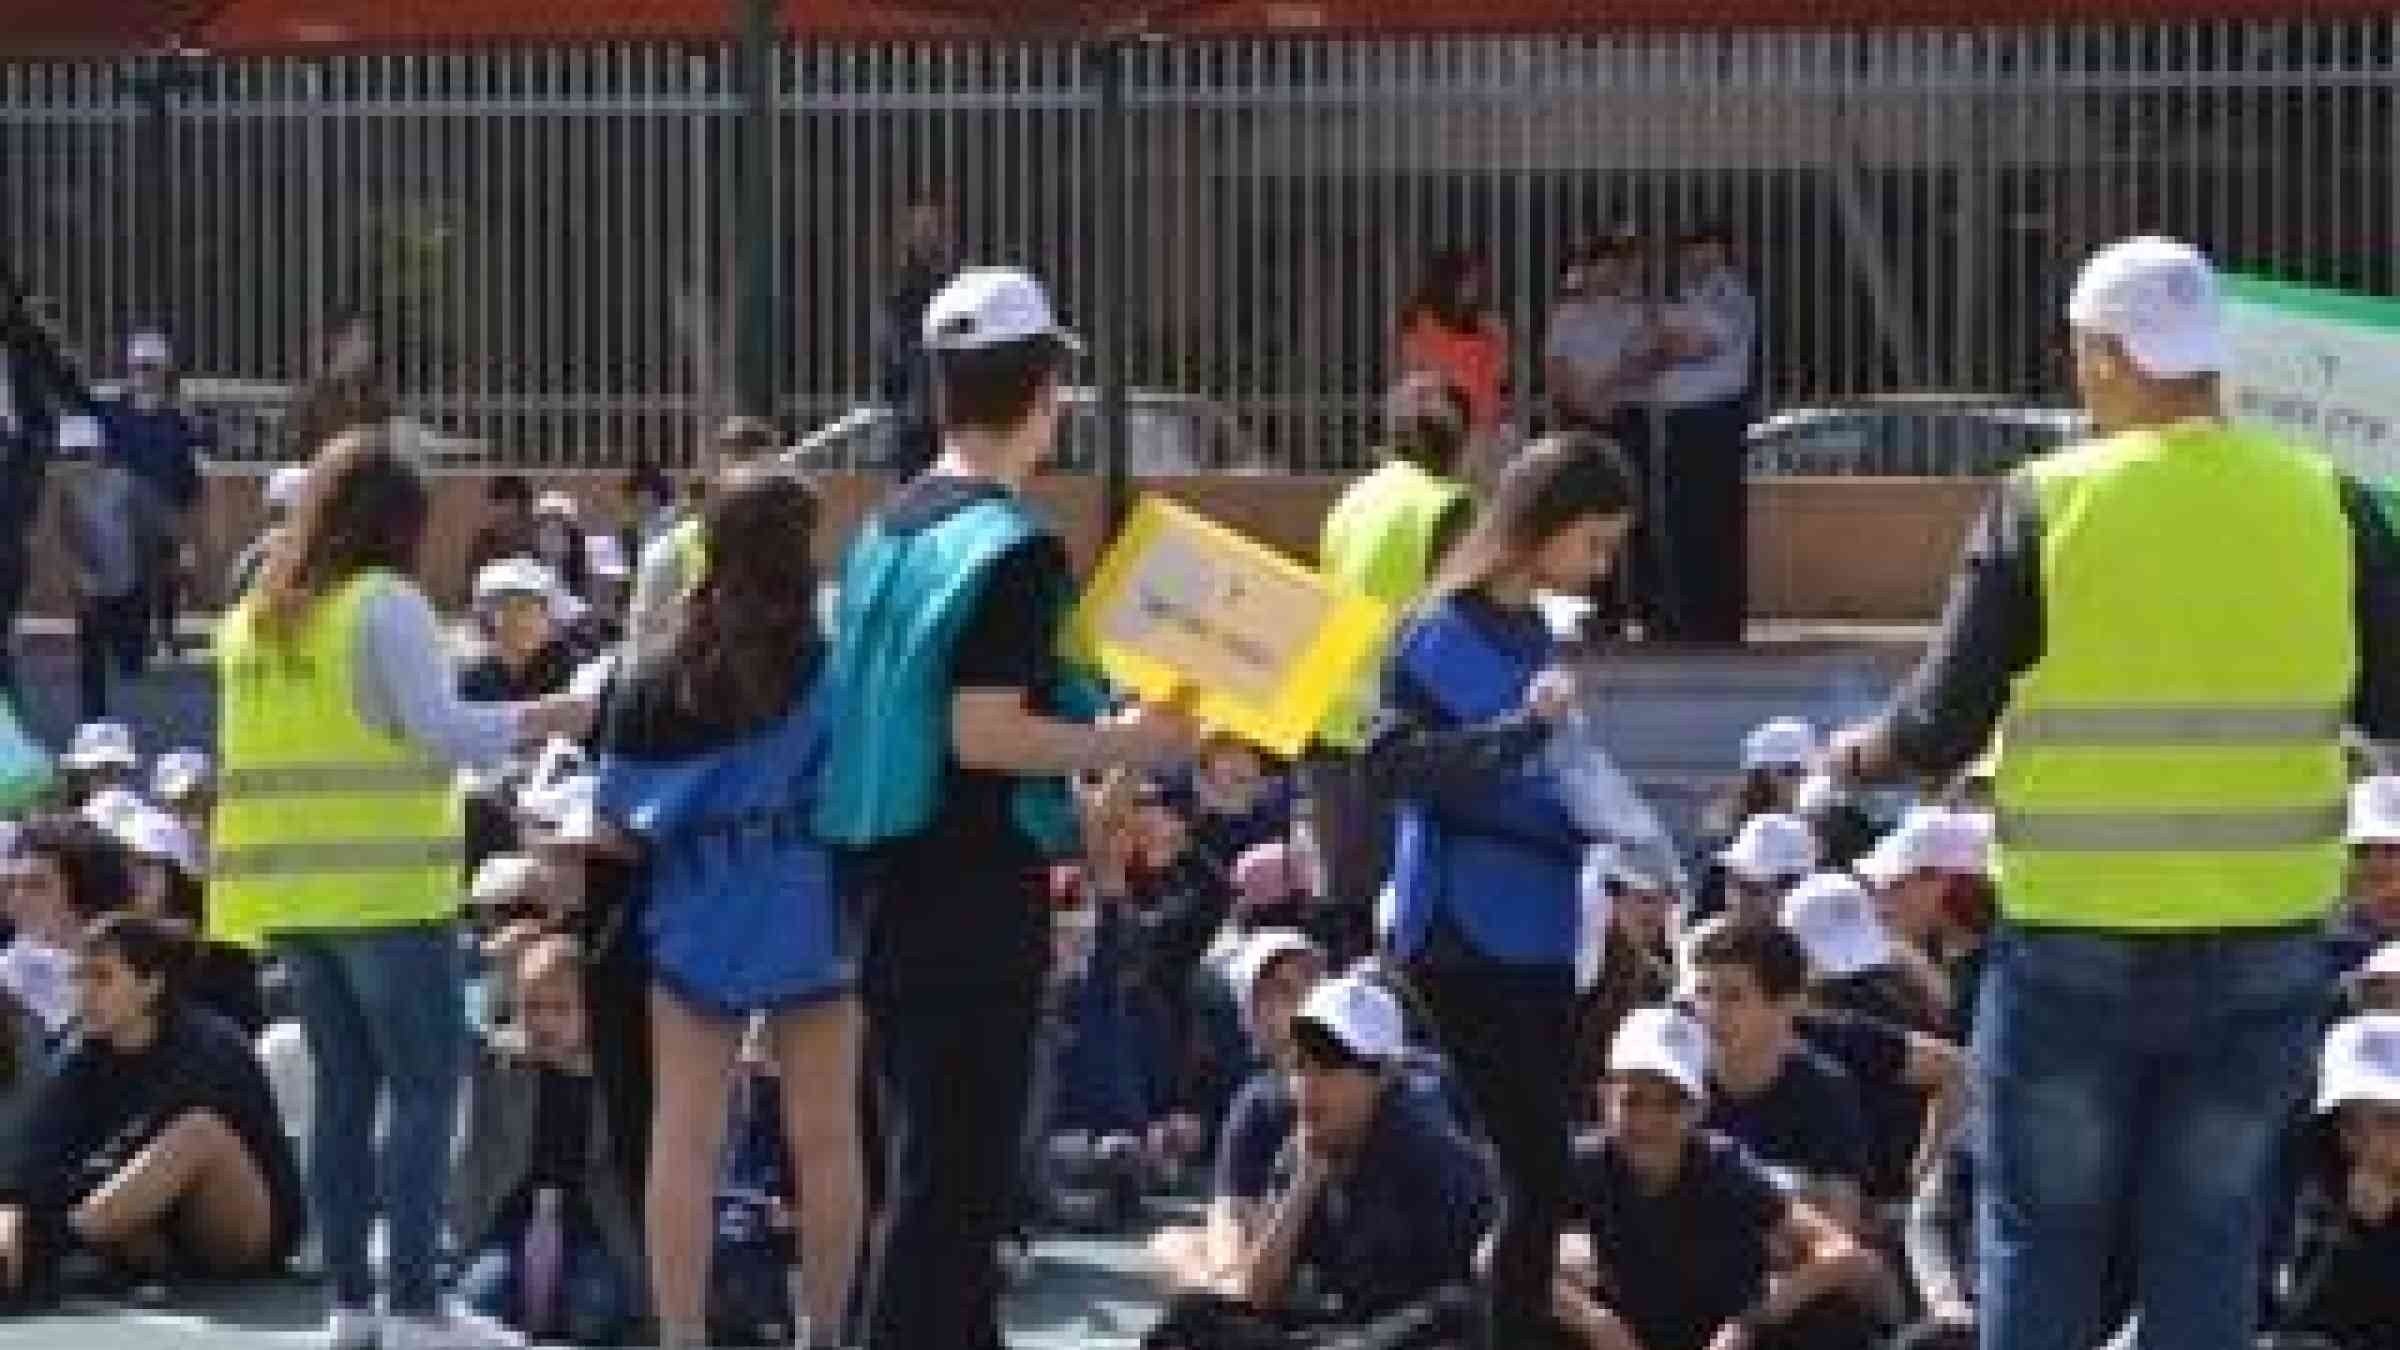 Children evacuate Gordon Elementary School in Tel Aviv tsunami drill